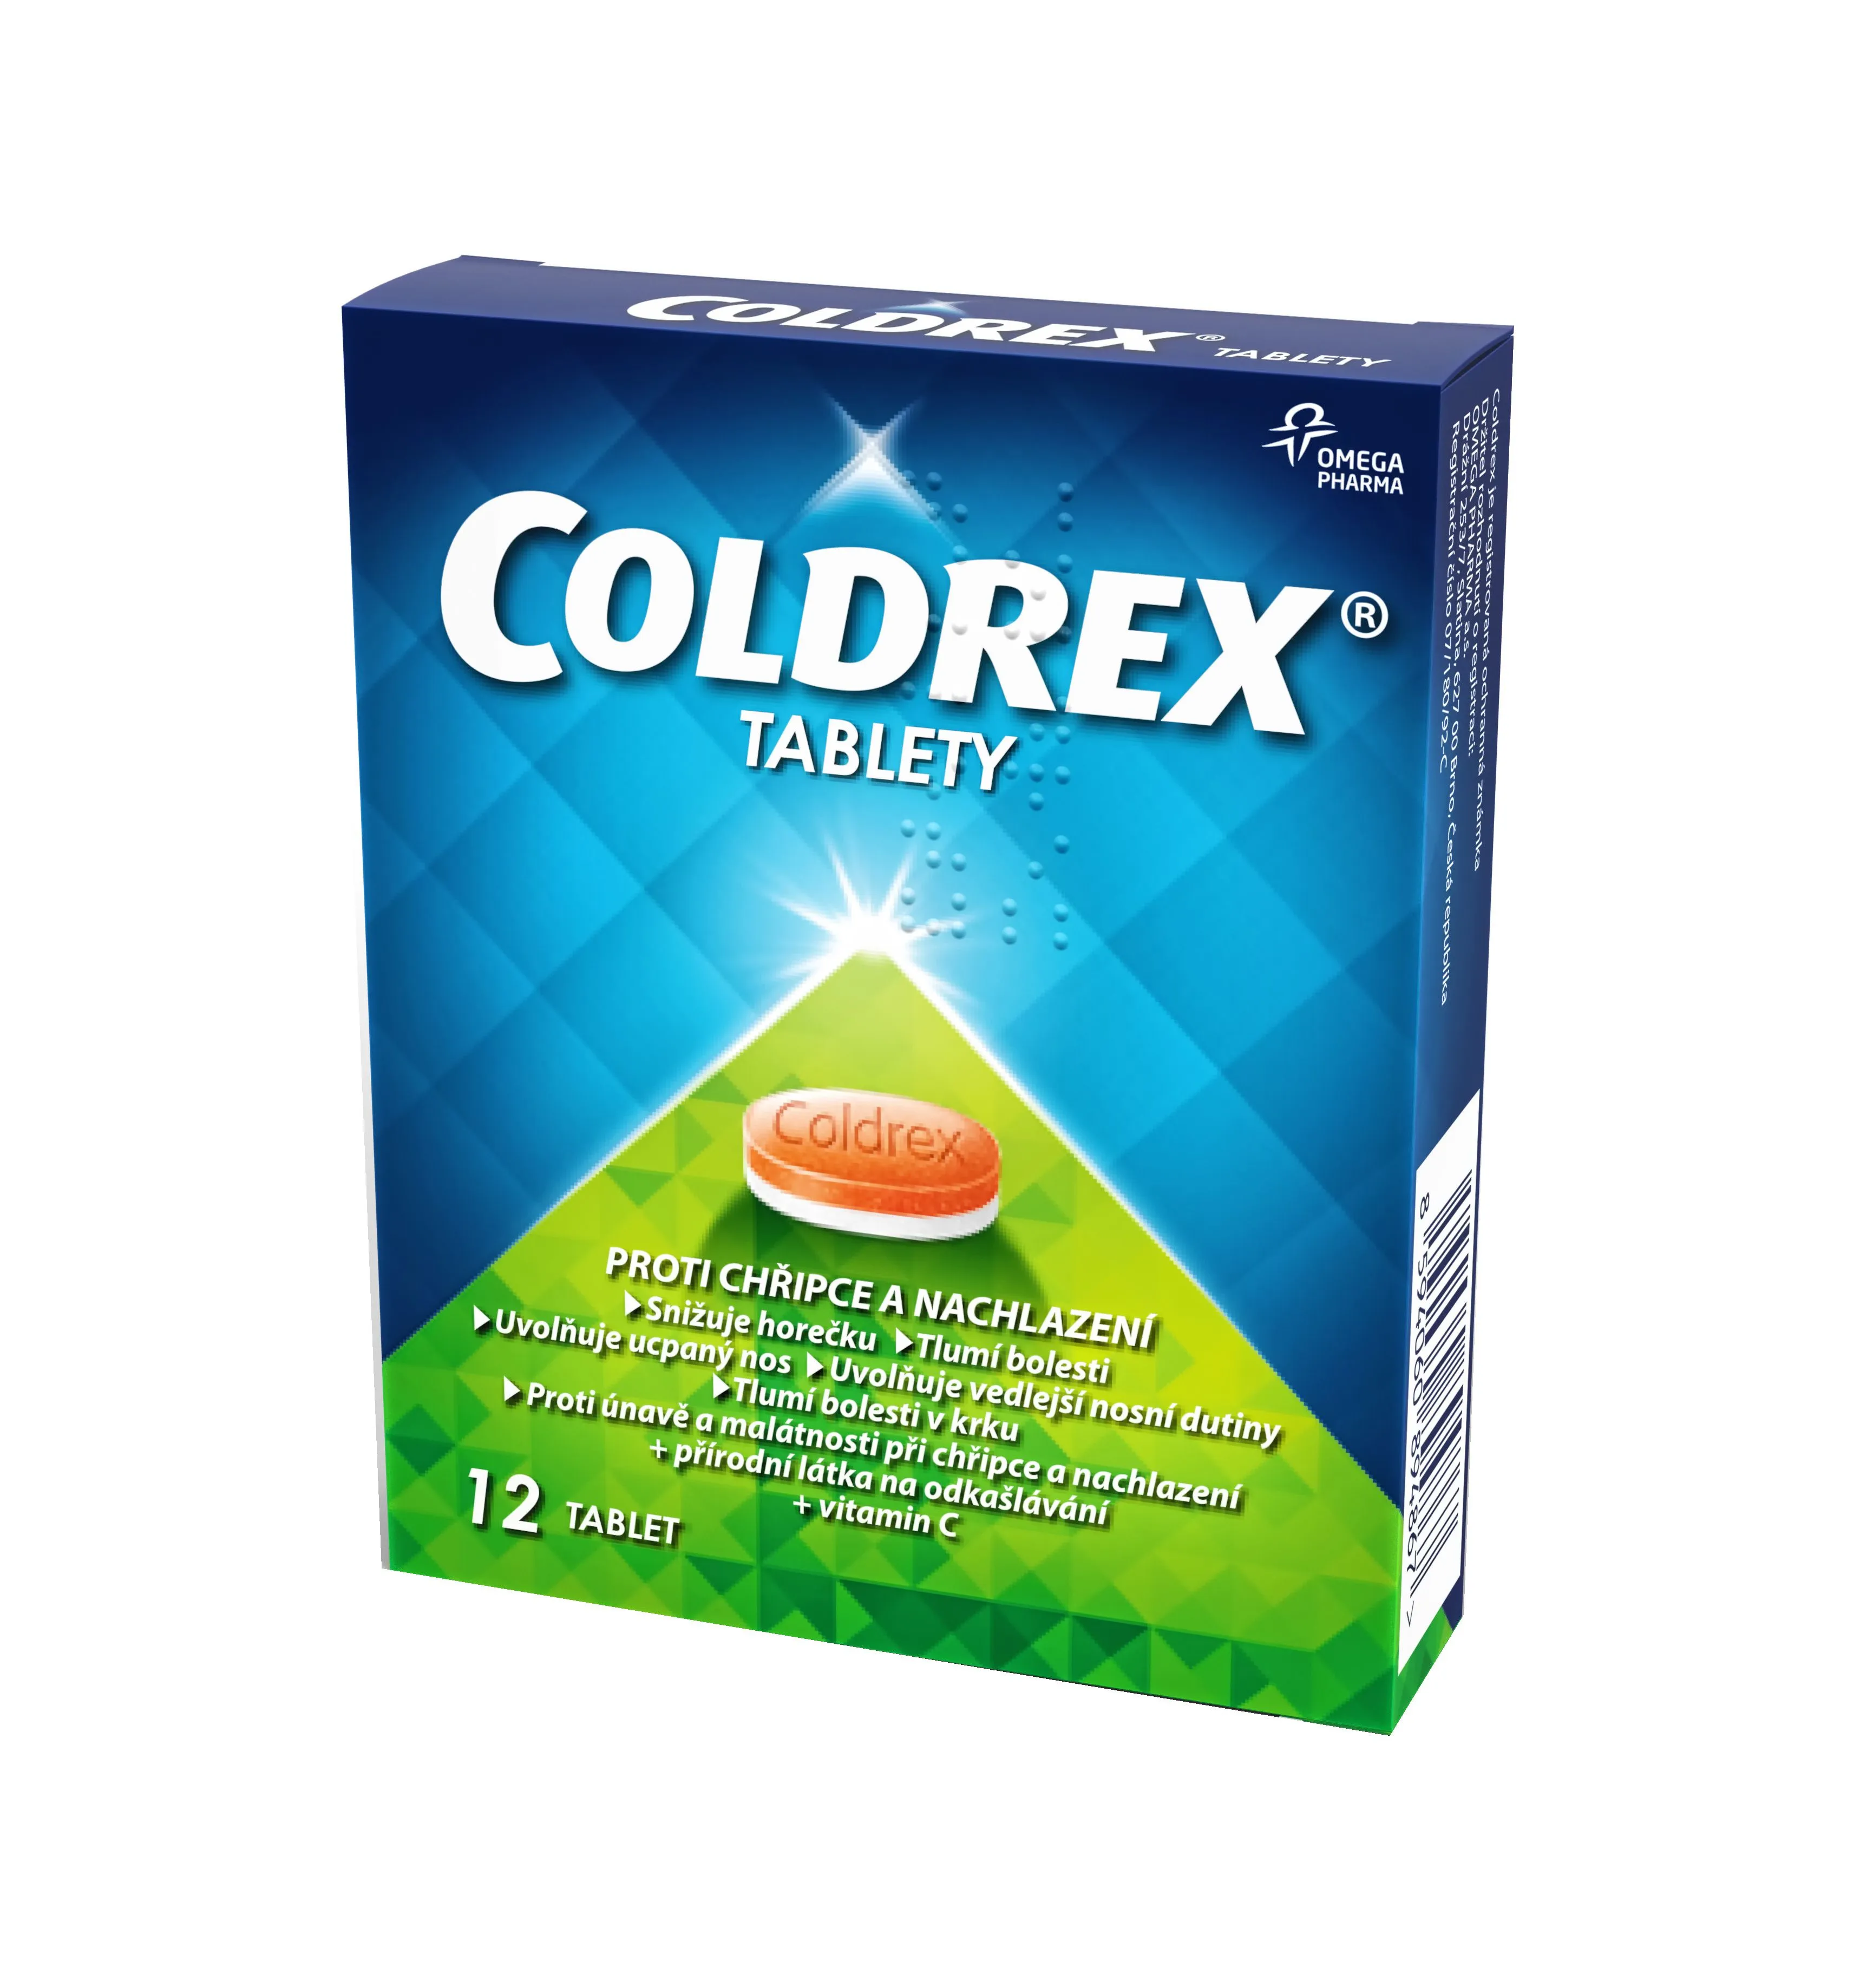 Coldrex TABLETY 12 tablet